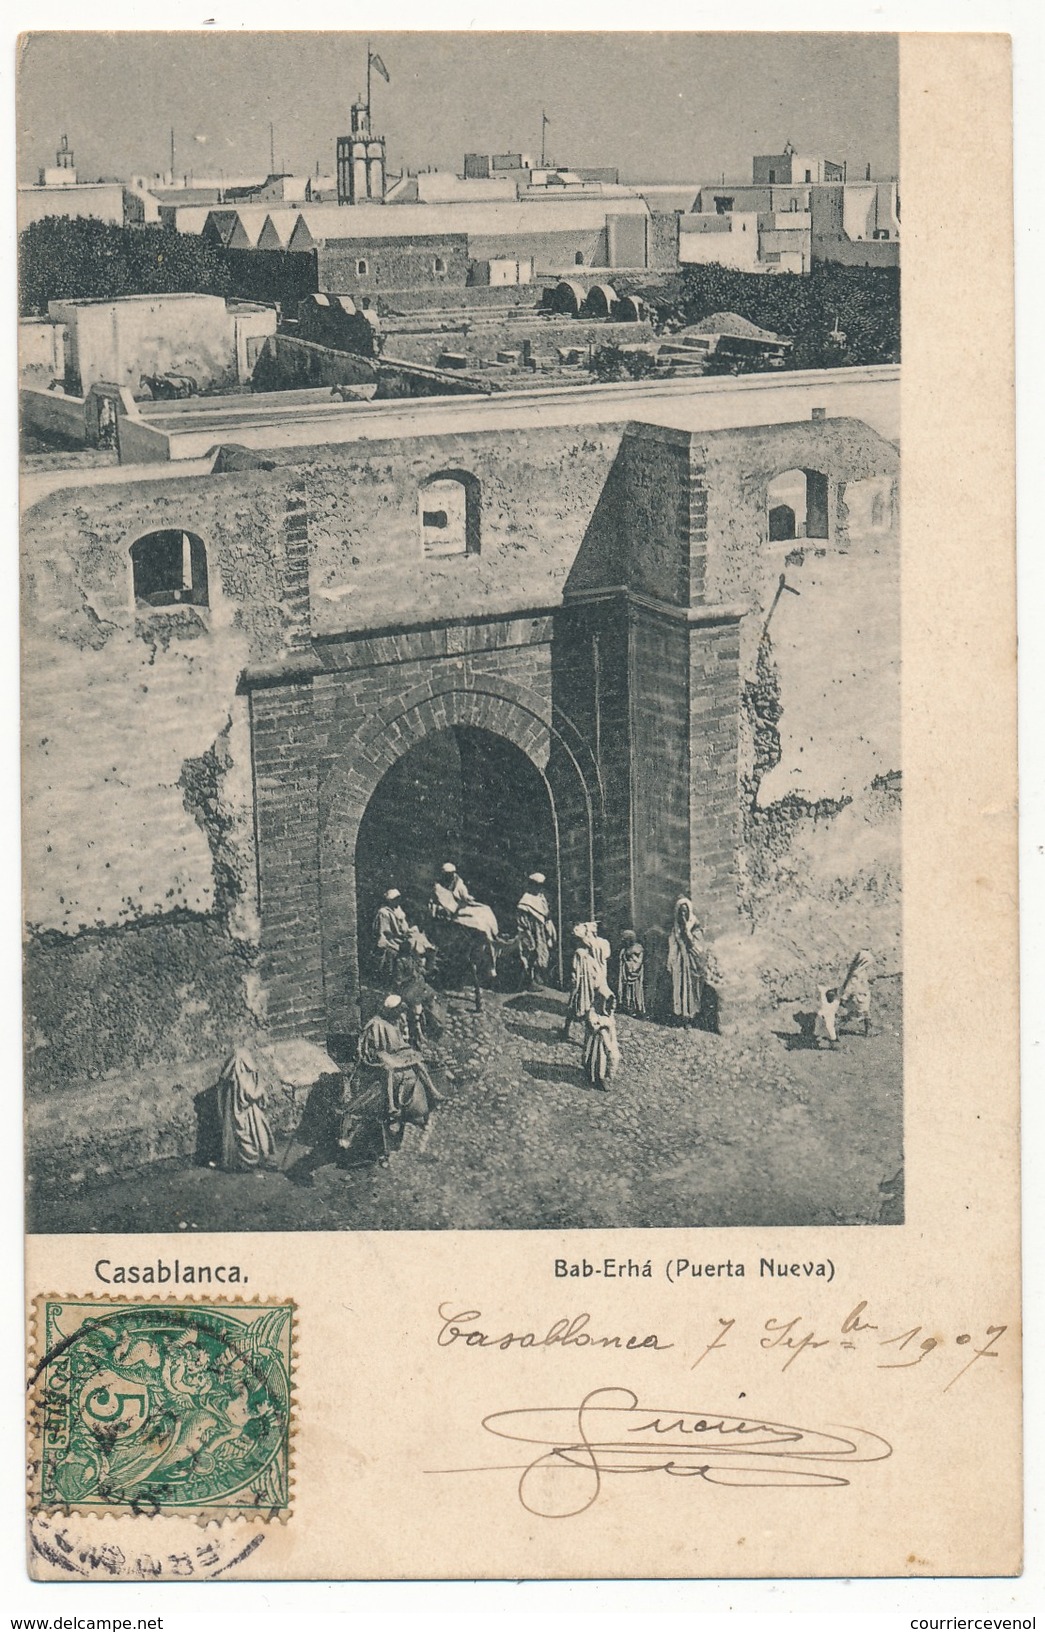 6 CPA - Campagne du MAROC - Casablanca + Ber Rechid : Grande mosquée, Petit Sokko, La Poste ...